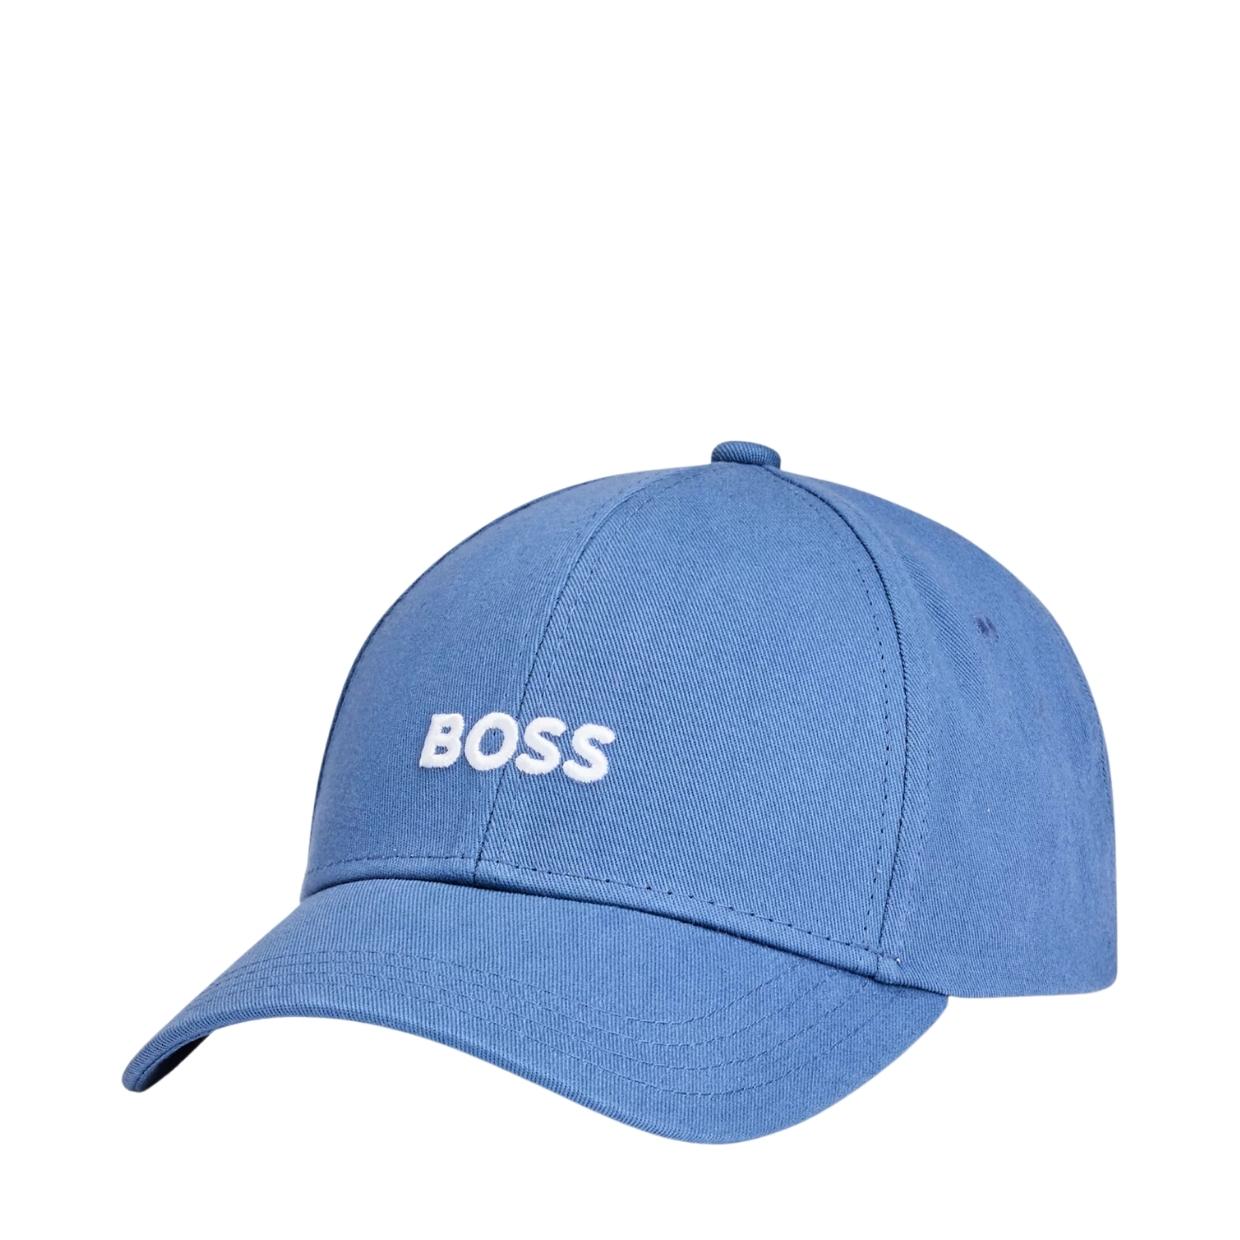 BOSS Zed Embroidered Logo Light Blue Cap